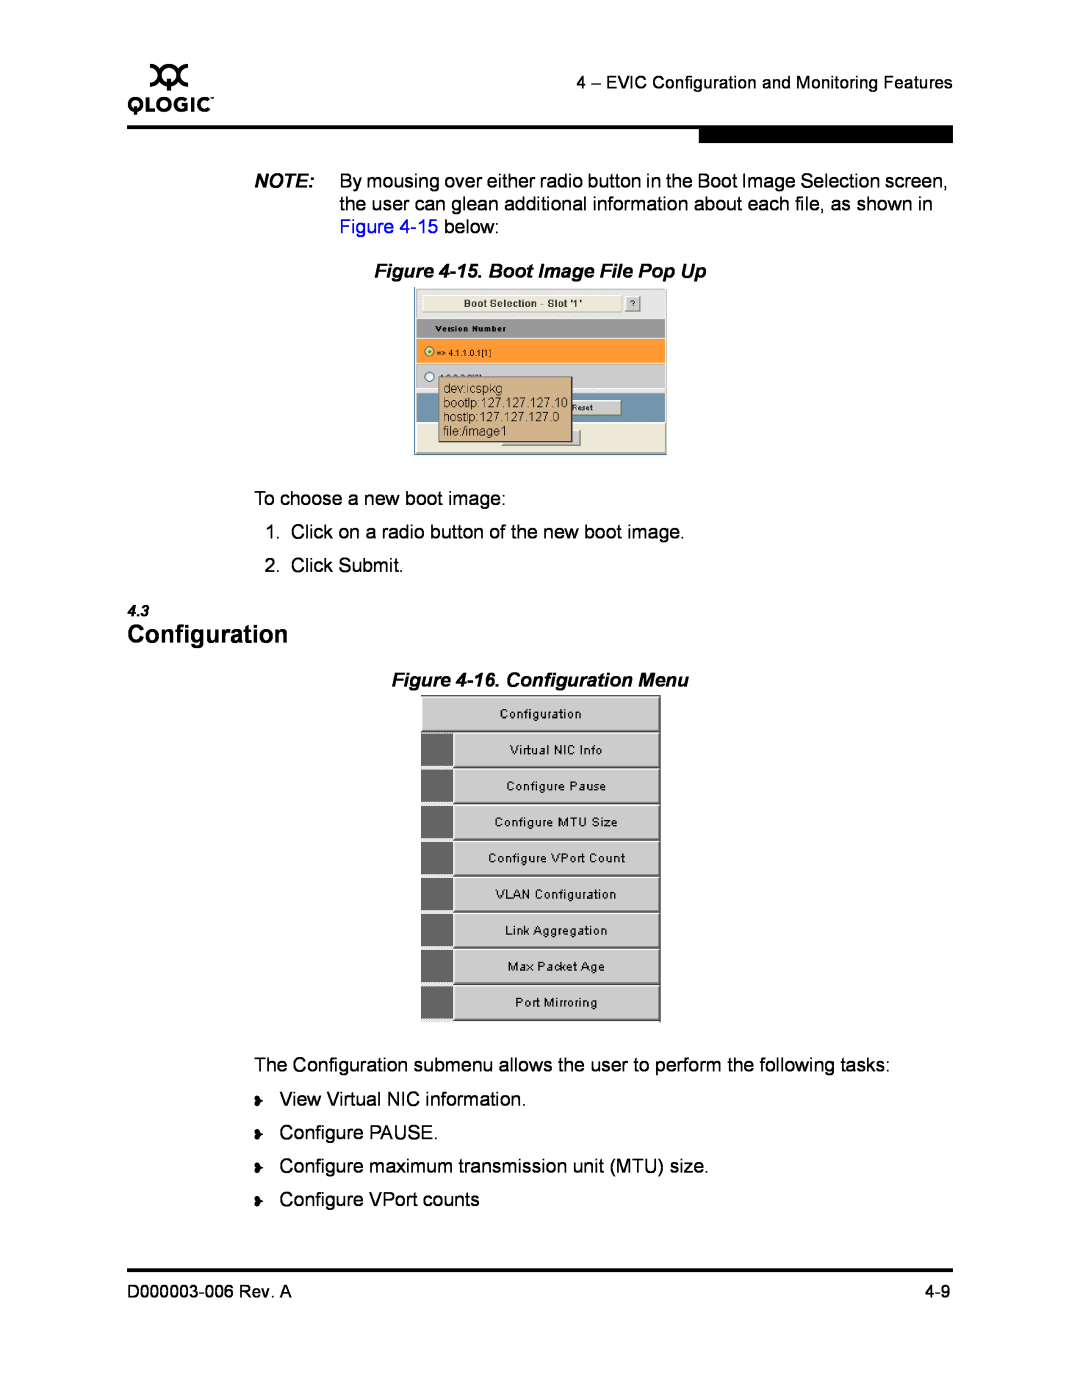 Q-Logic 9000 manual 15. Boot Image File Pop Up, 16. Configuration Menu 